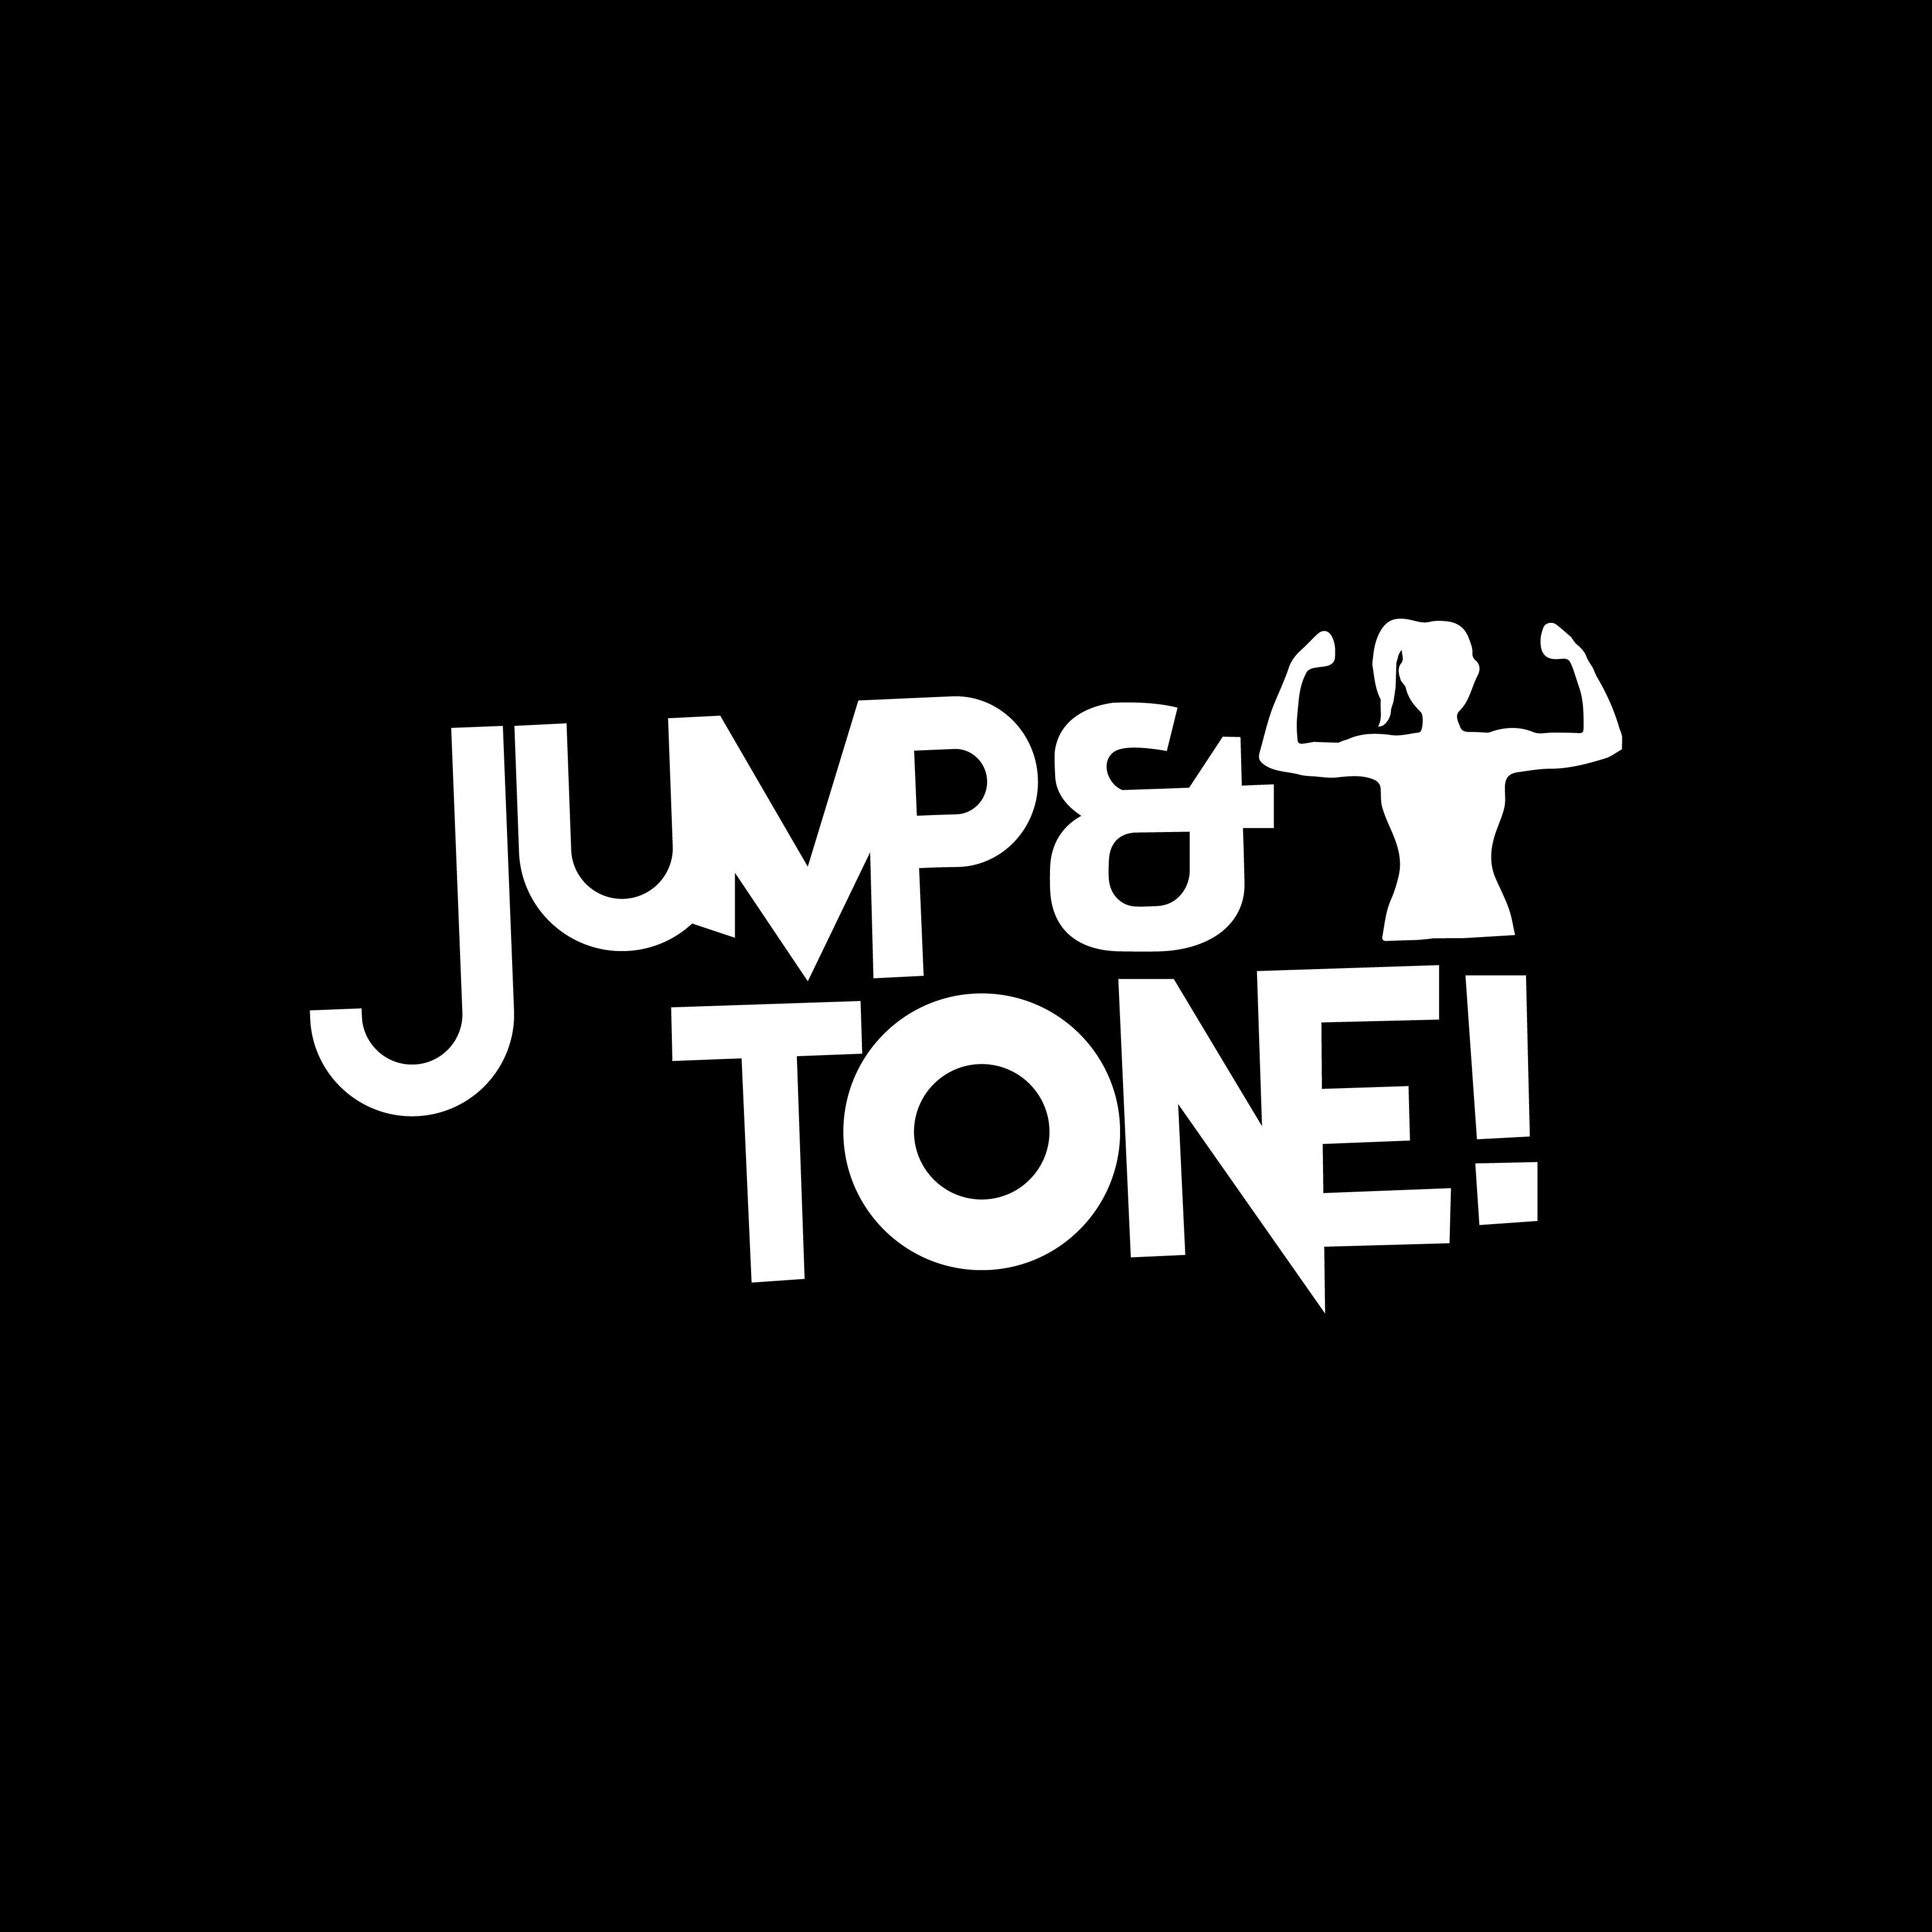 JUMP & TONE